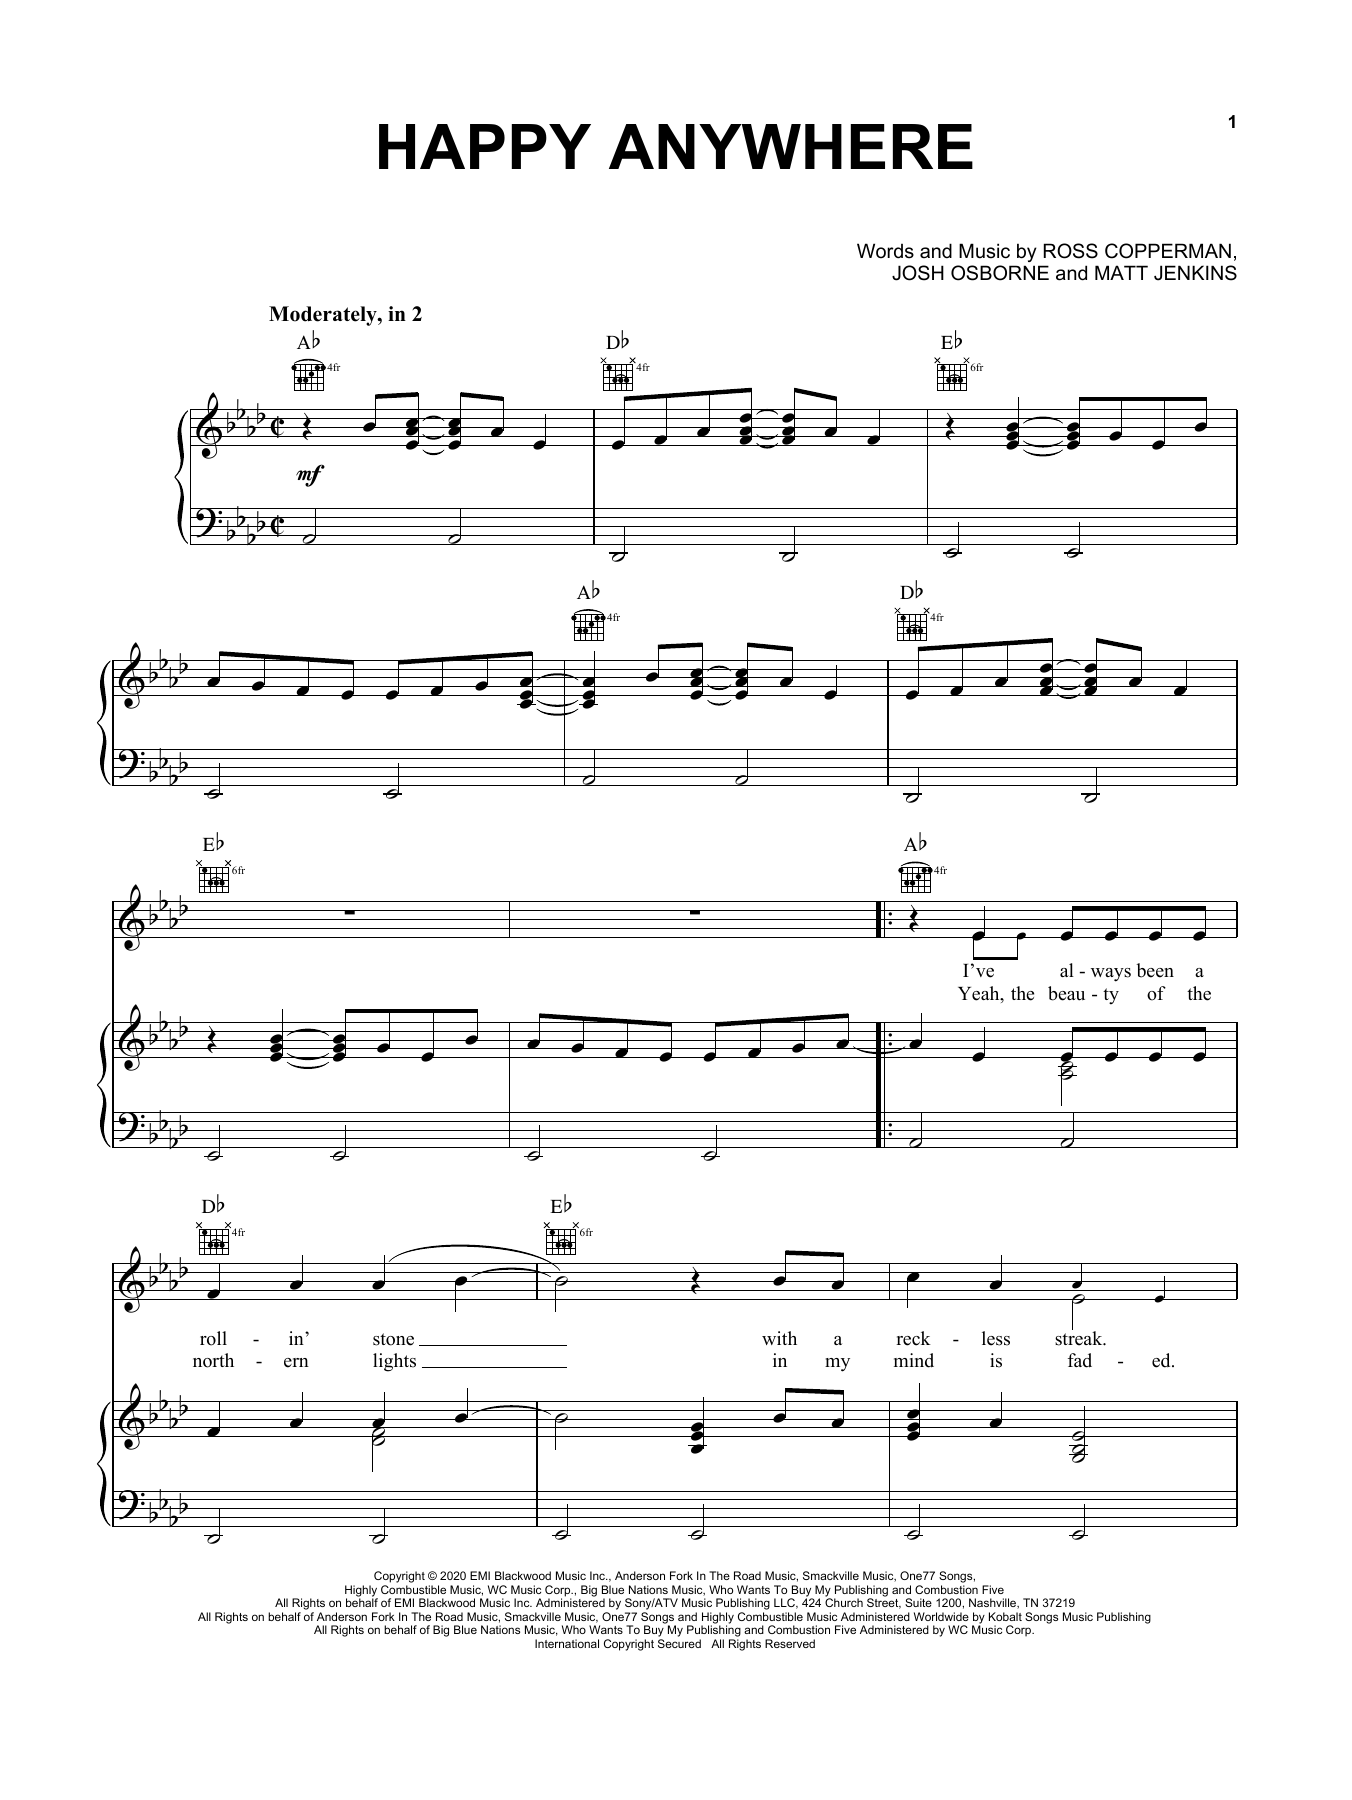 Blake Shelton Happy Anywhere (feat. Gwen Stefani) Sheet Music Notes & Chords for Ukulele - Download or Print PDF